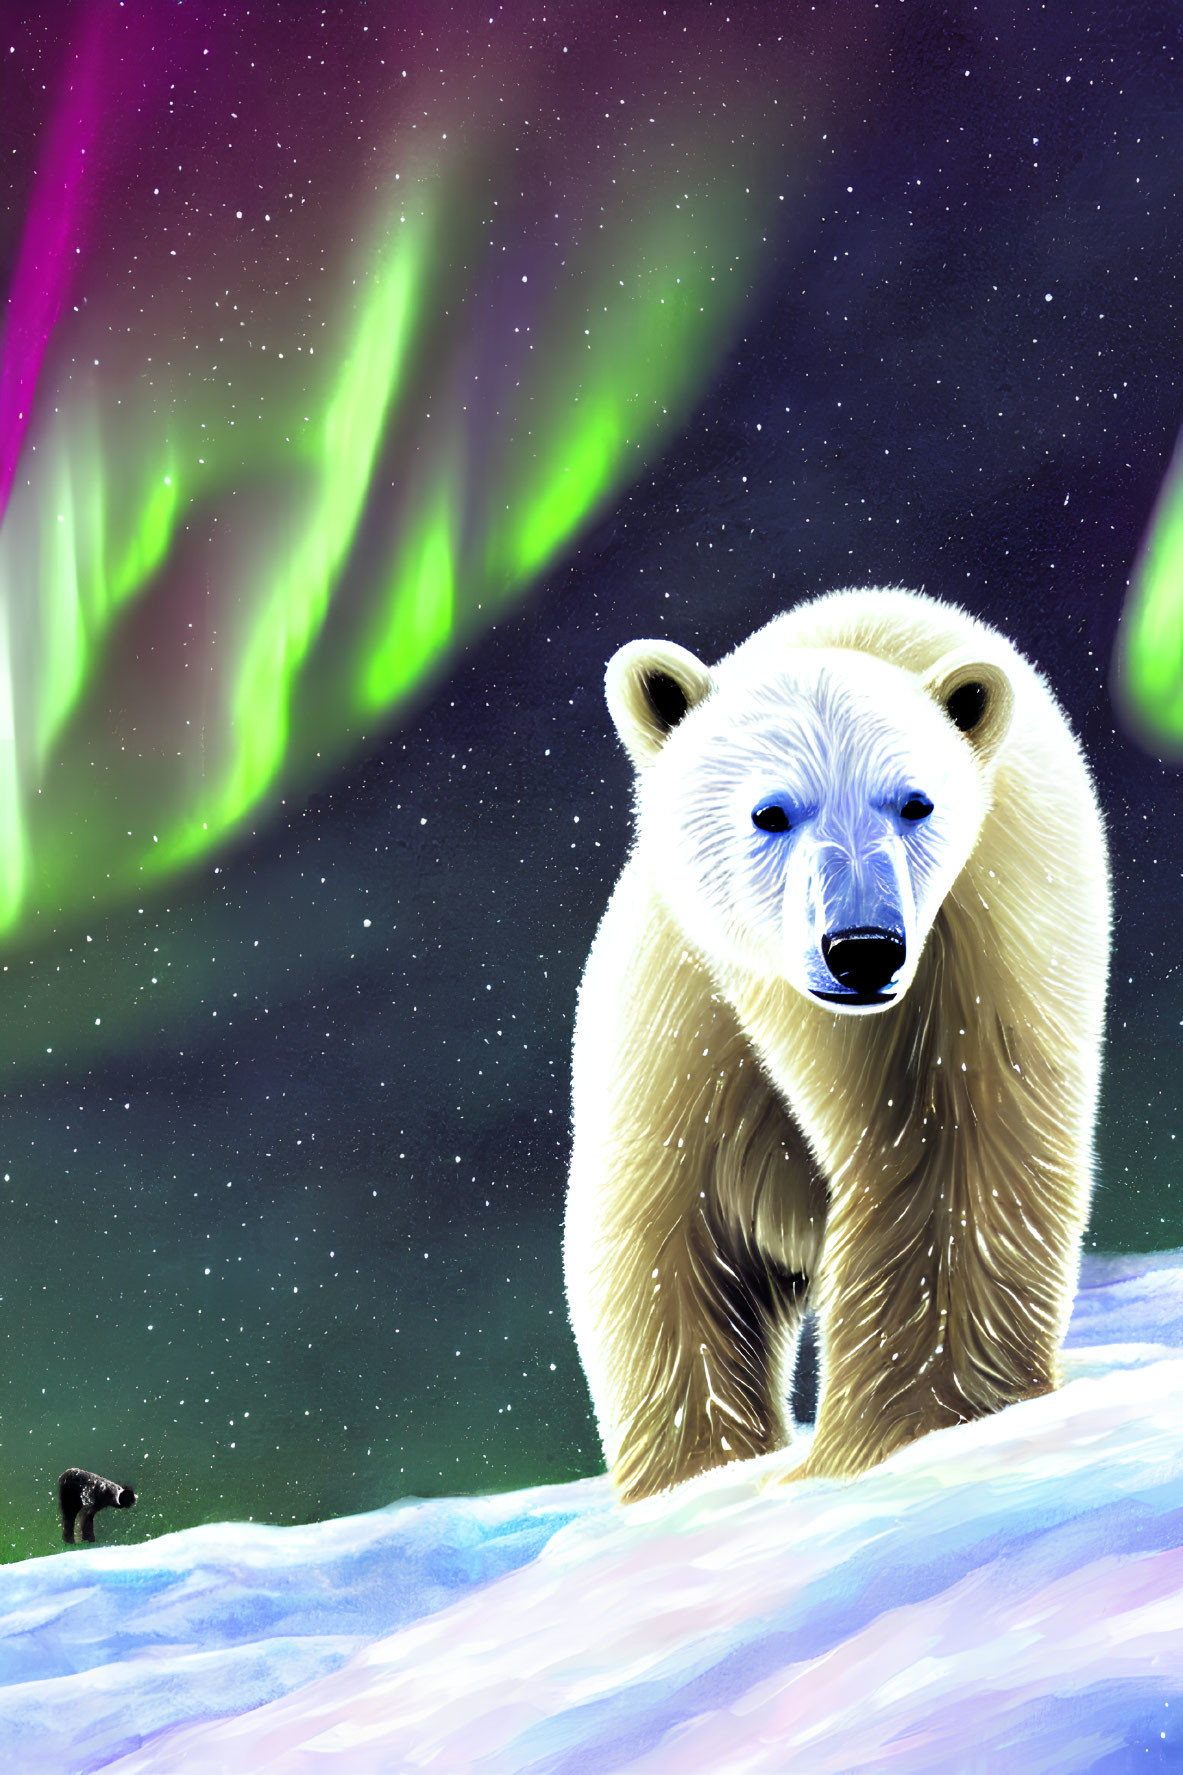 Polar bear in snow under starry sky with aurora borealis